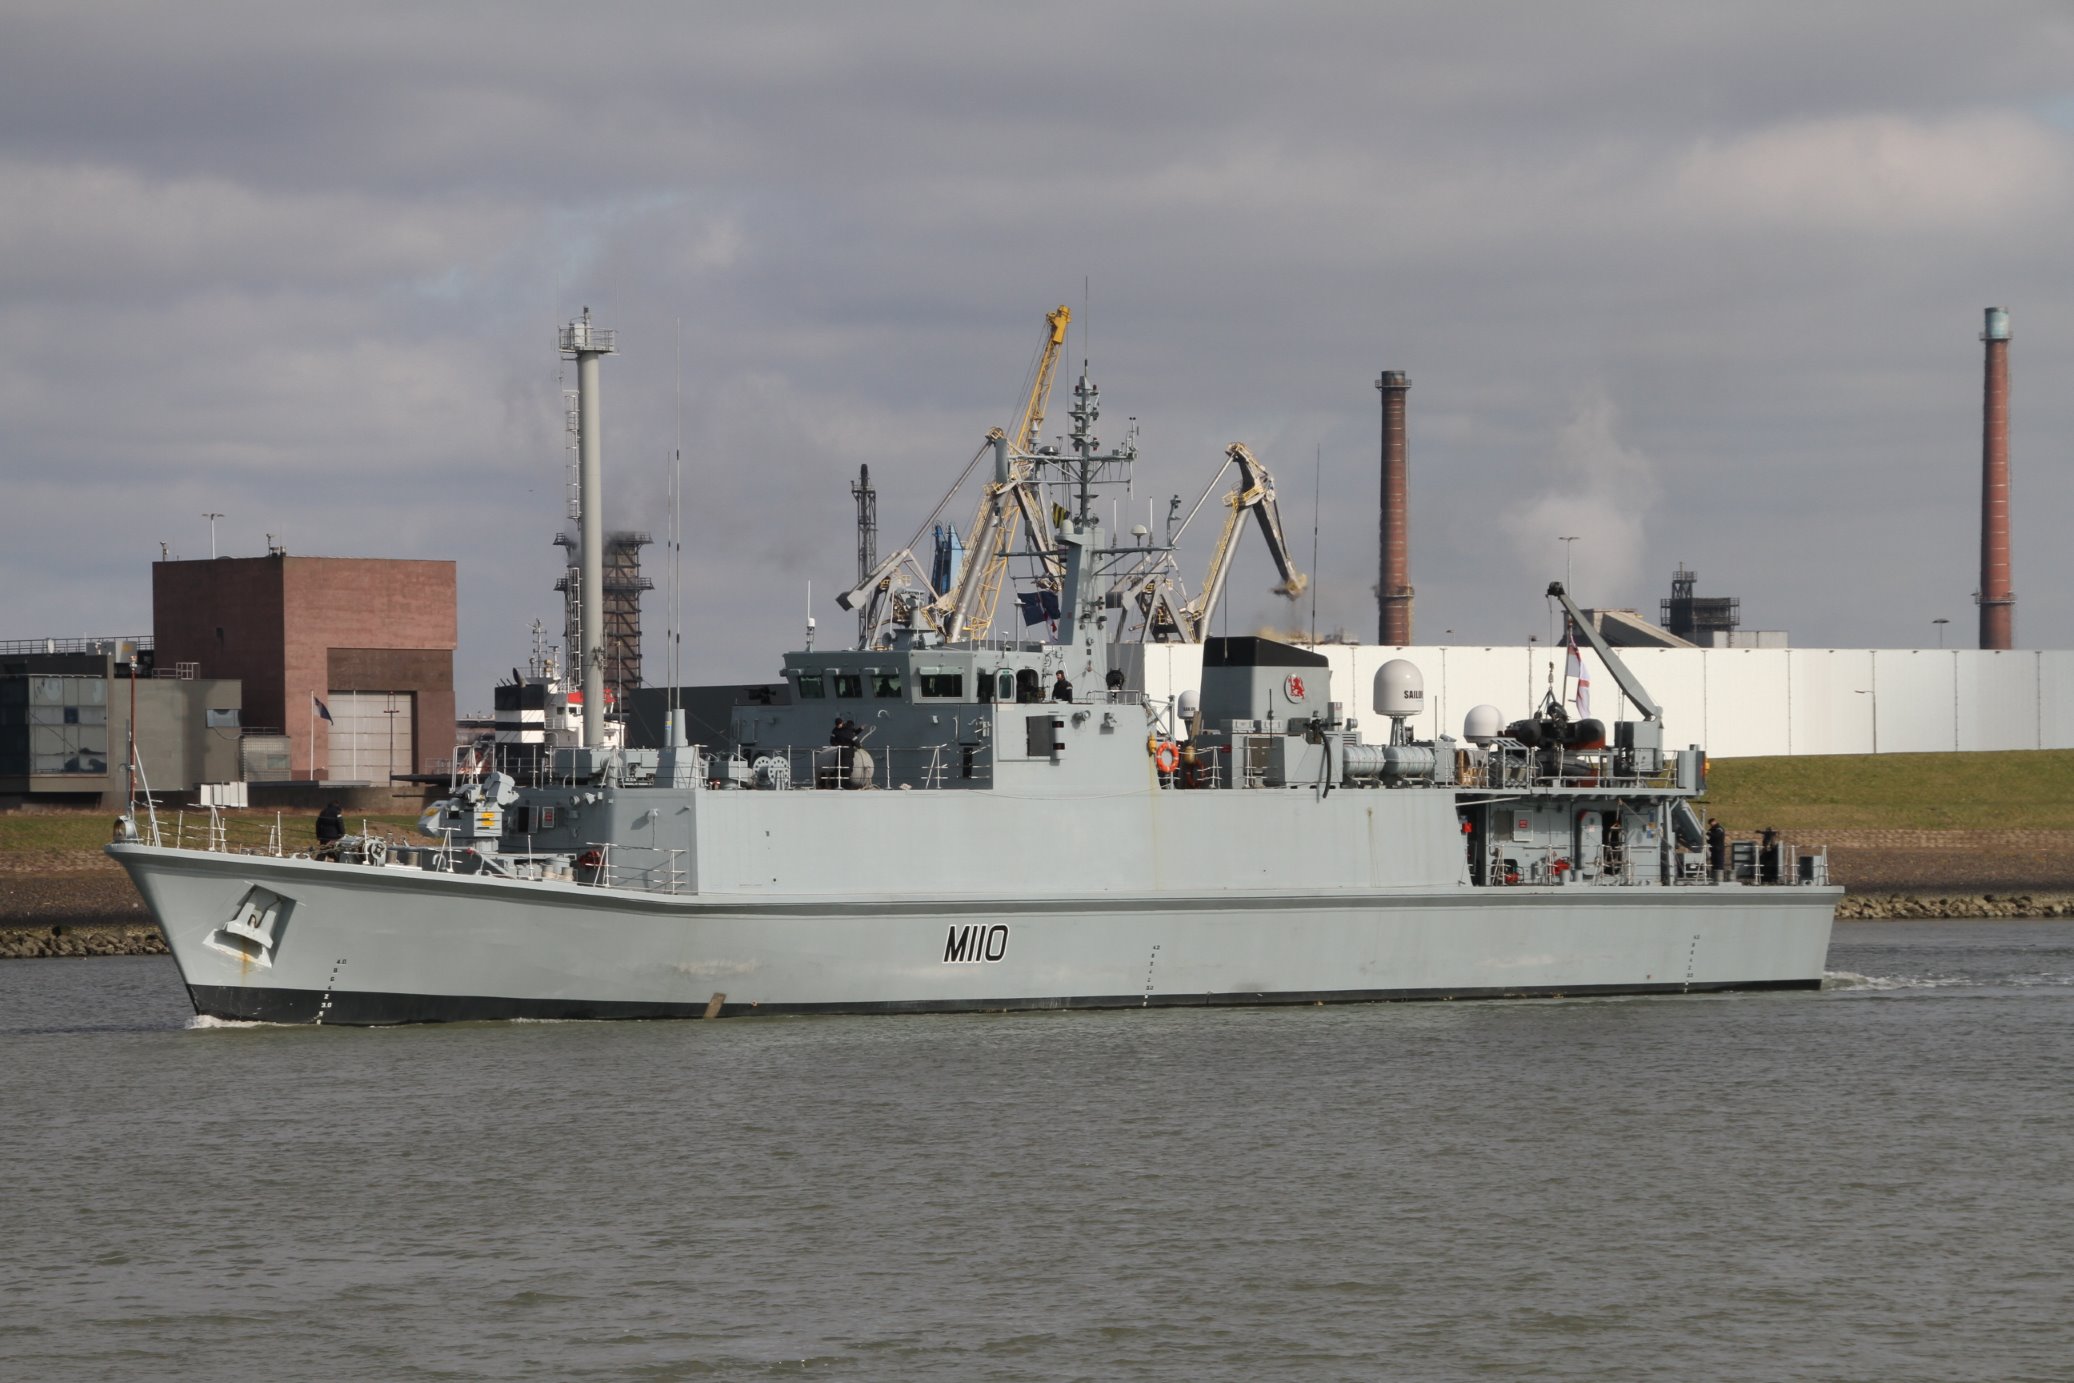 M110 HMS RAMSEY 